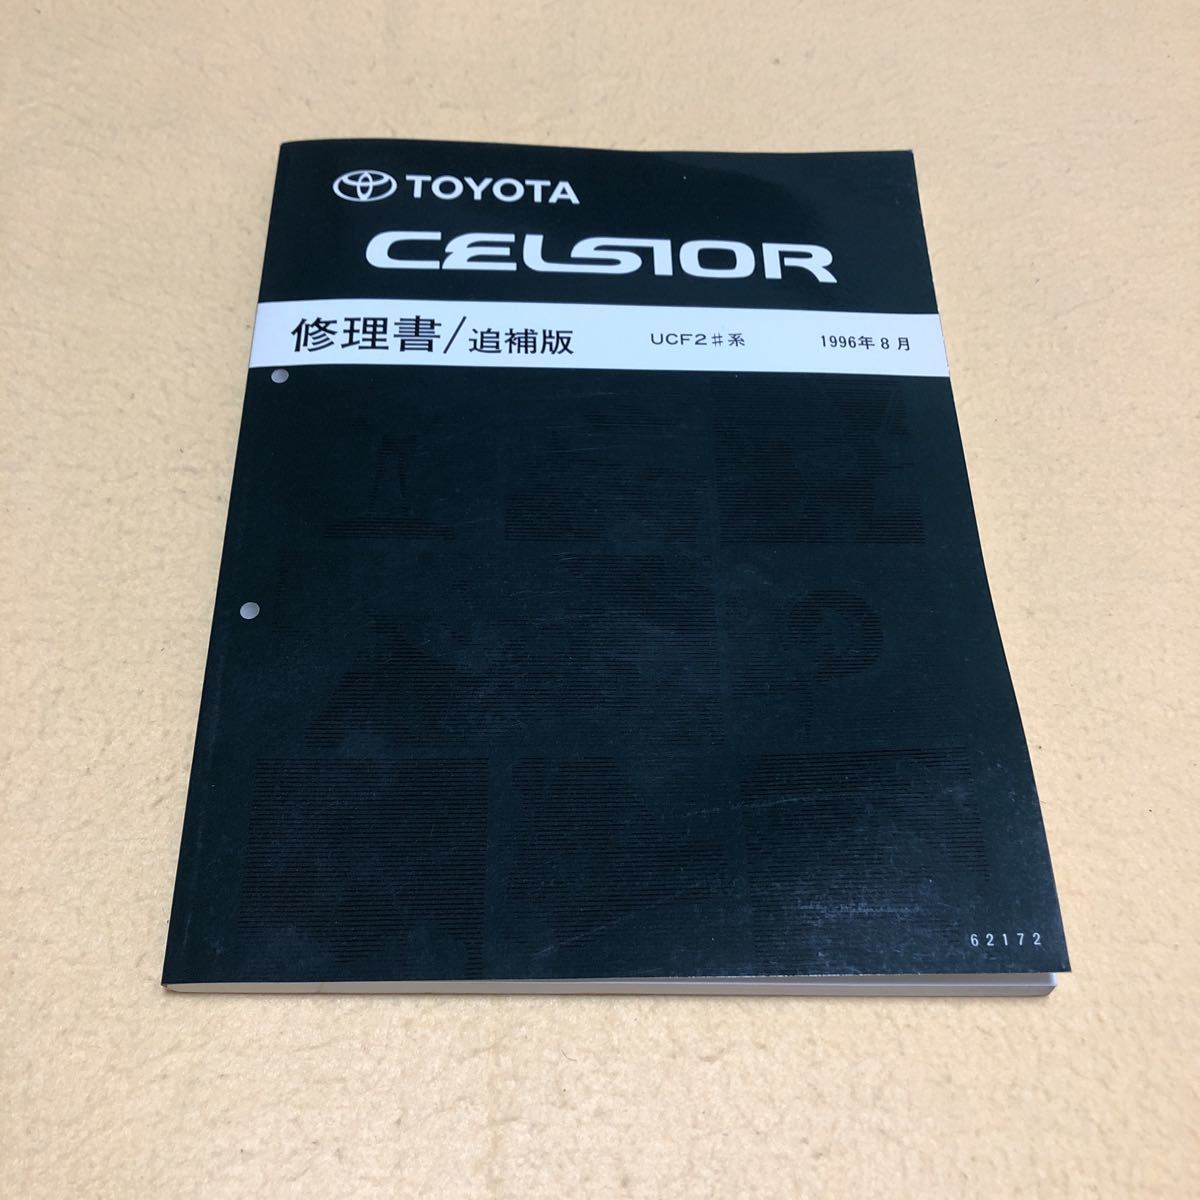  Celsior CELSIOR UCF20 UCF21 1996 year 8 month repair book supplement version *